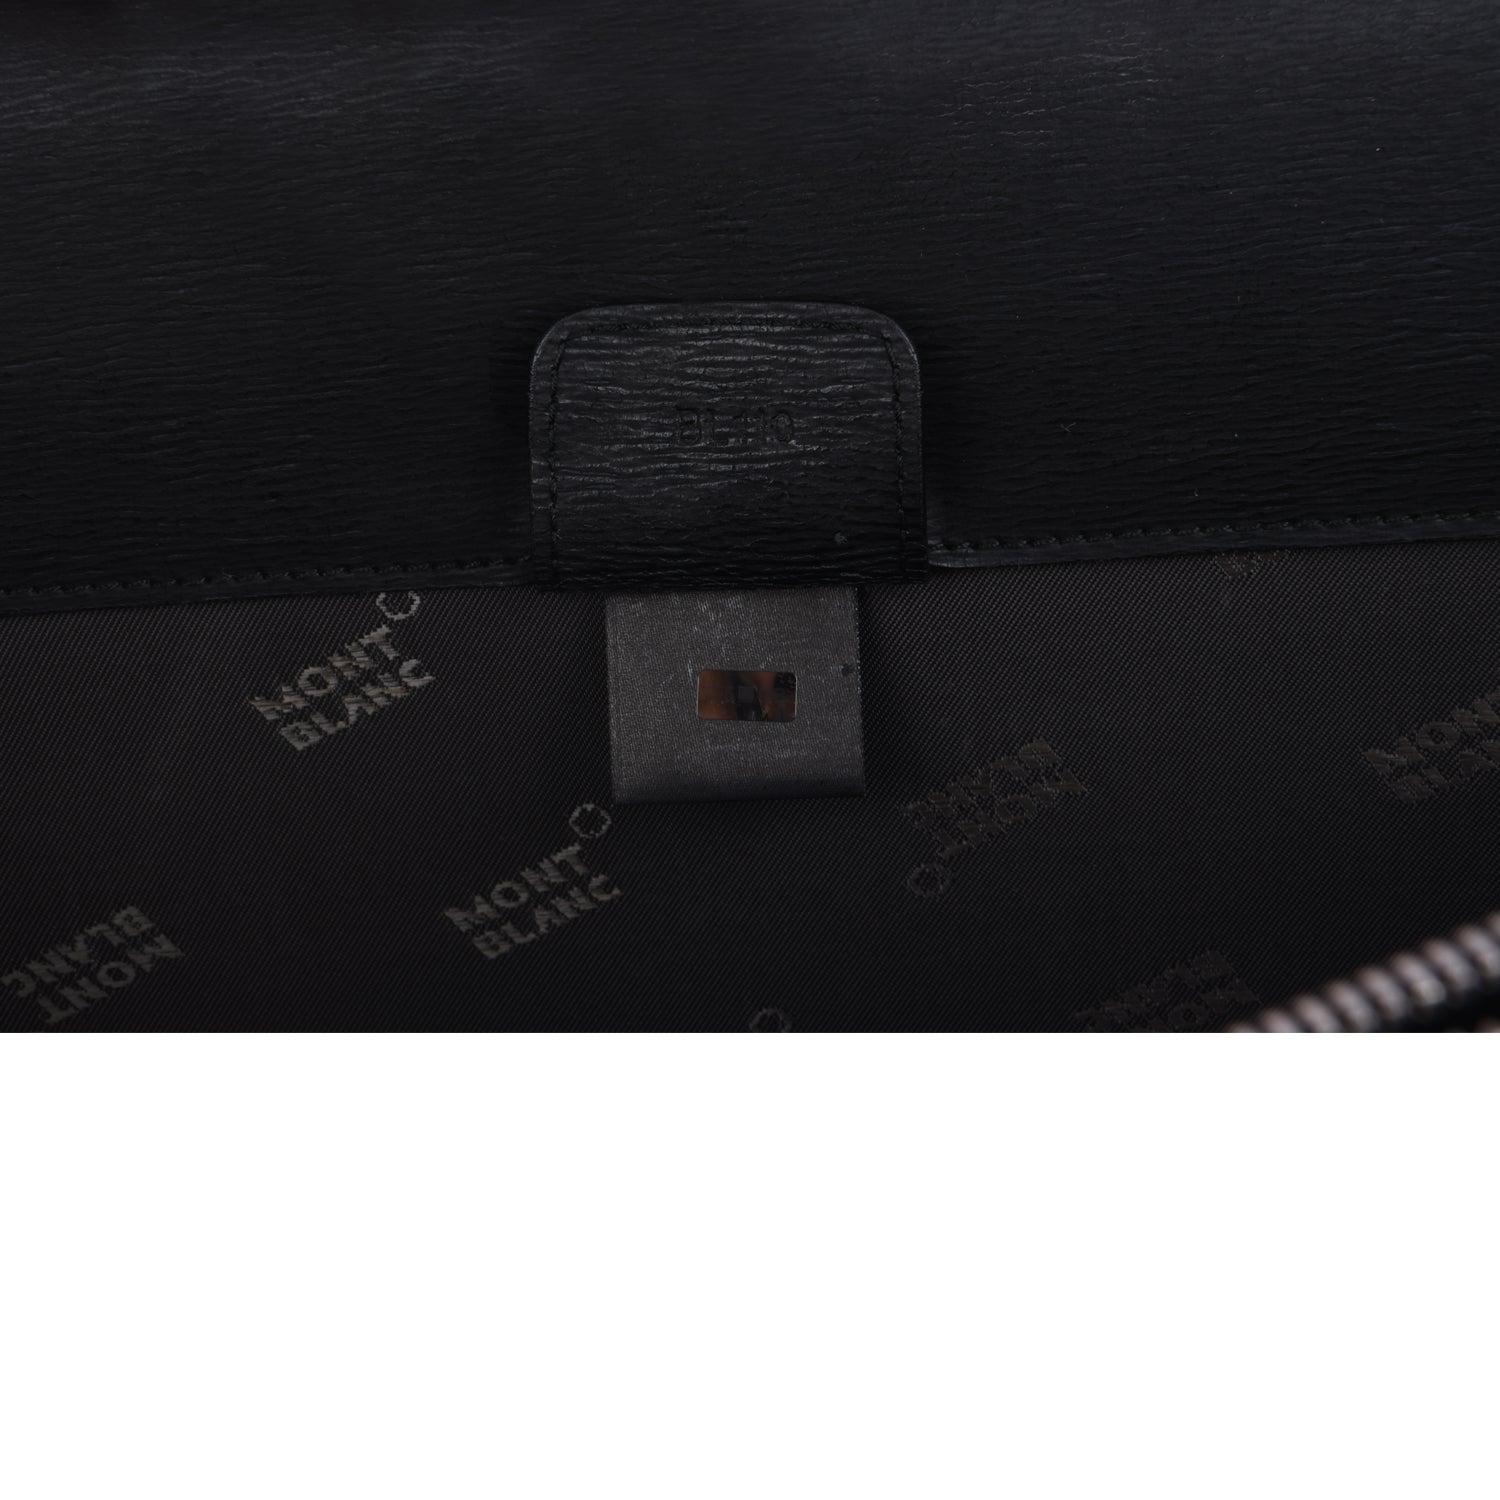 Black Meisterstuck Leather Briefcase